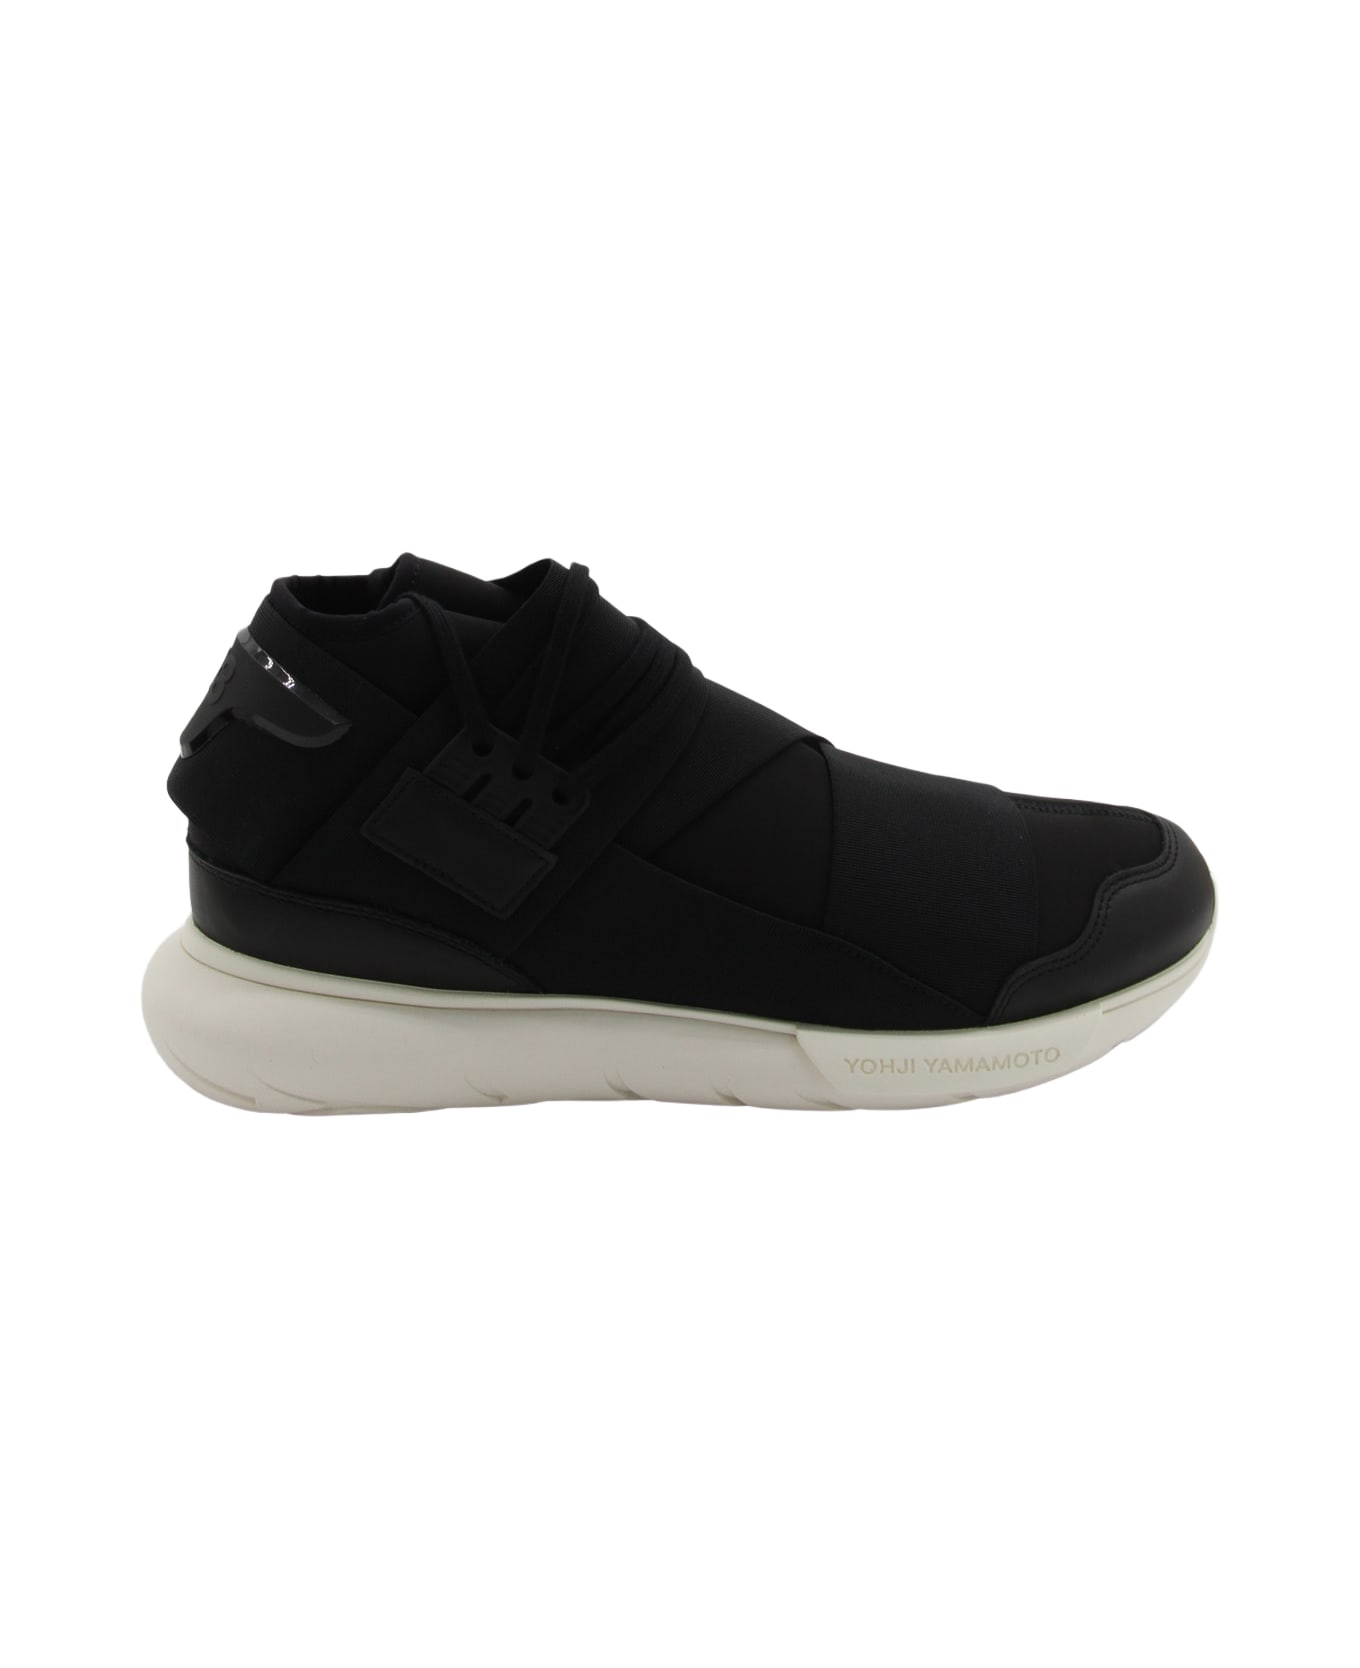 Y-3 Black And Off White Qasa Sneakers - black/black/off white